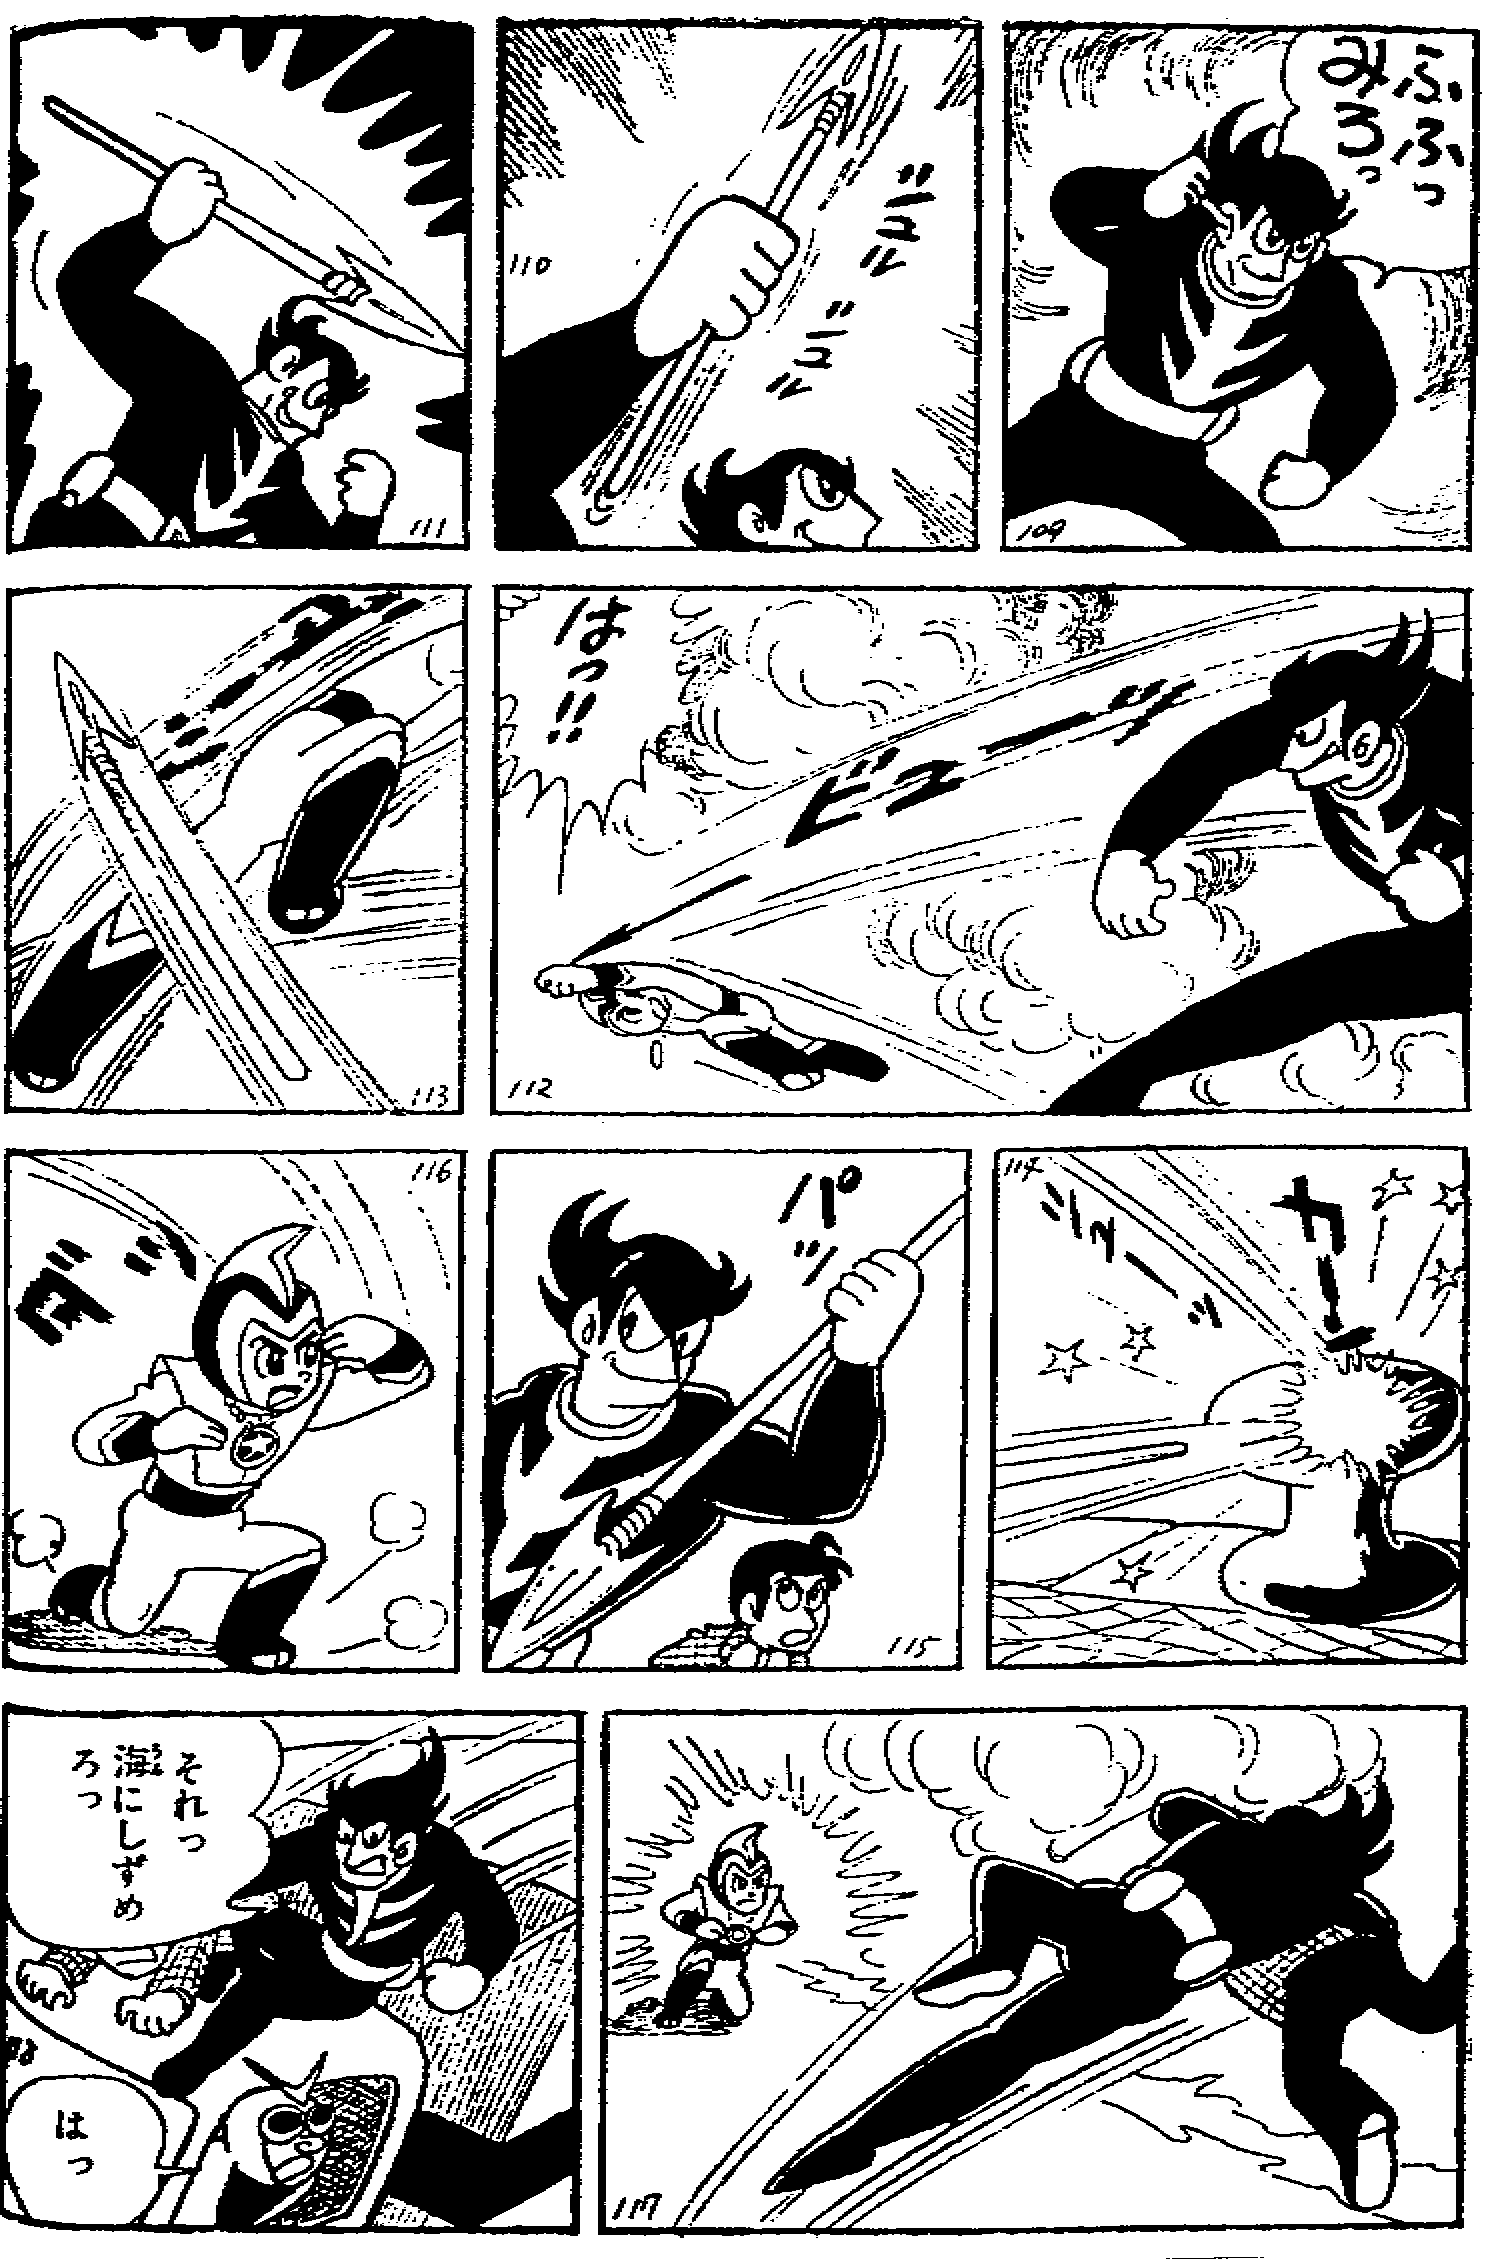 Japenese anime comic strip